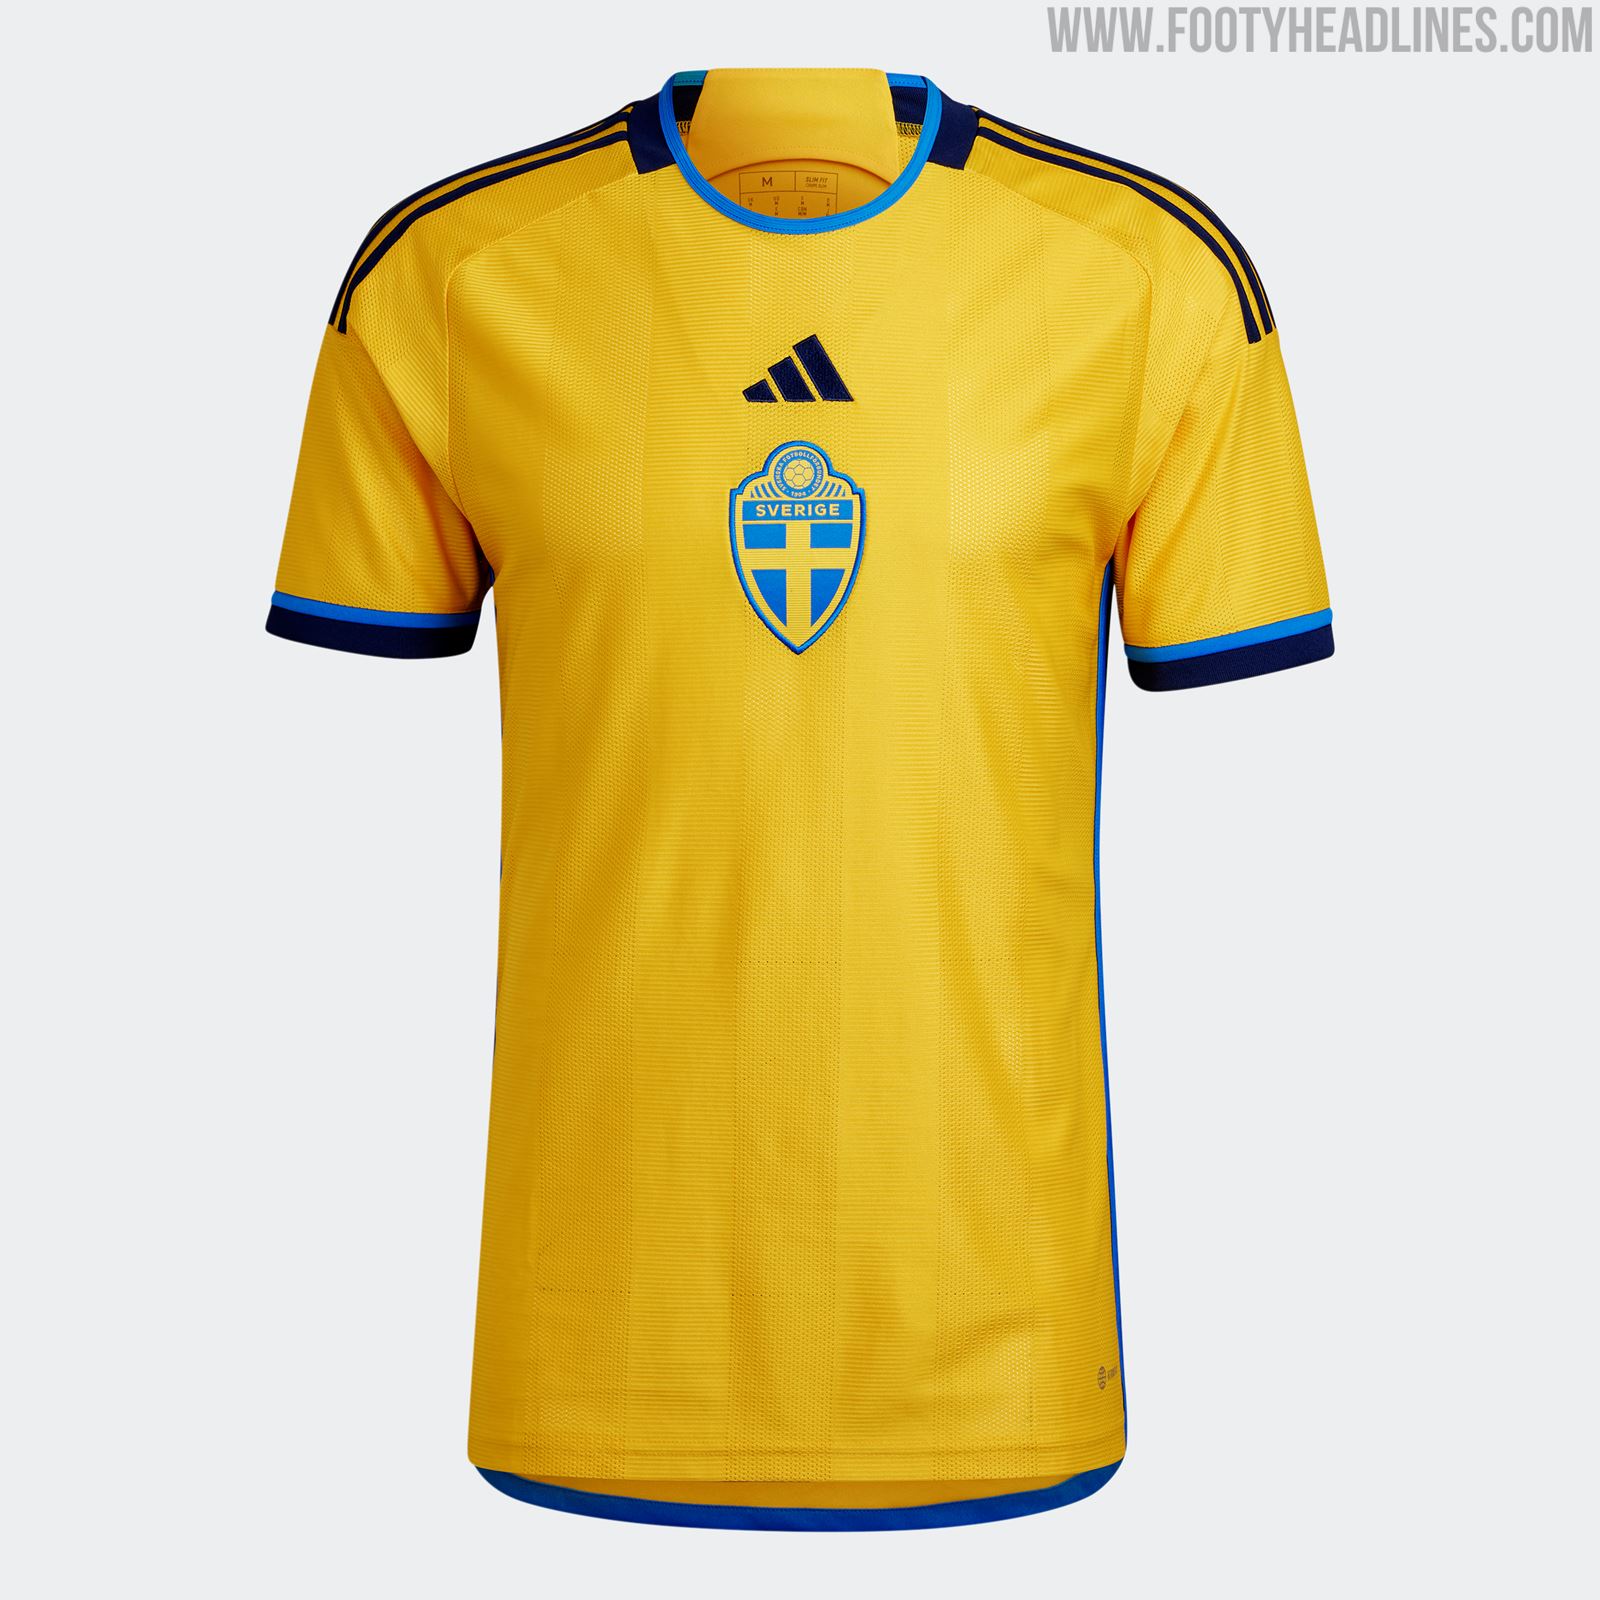 Sweden 2022 Home & Away Kits Released - Footy Headlines